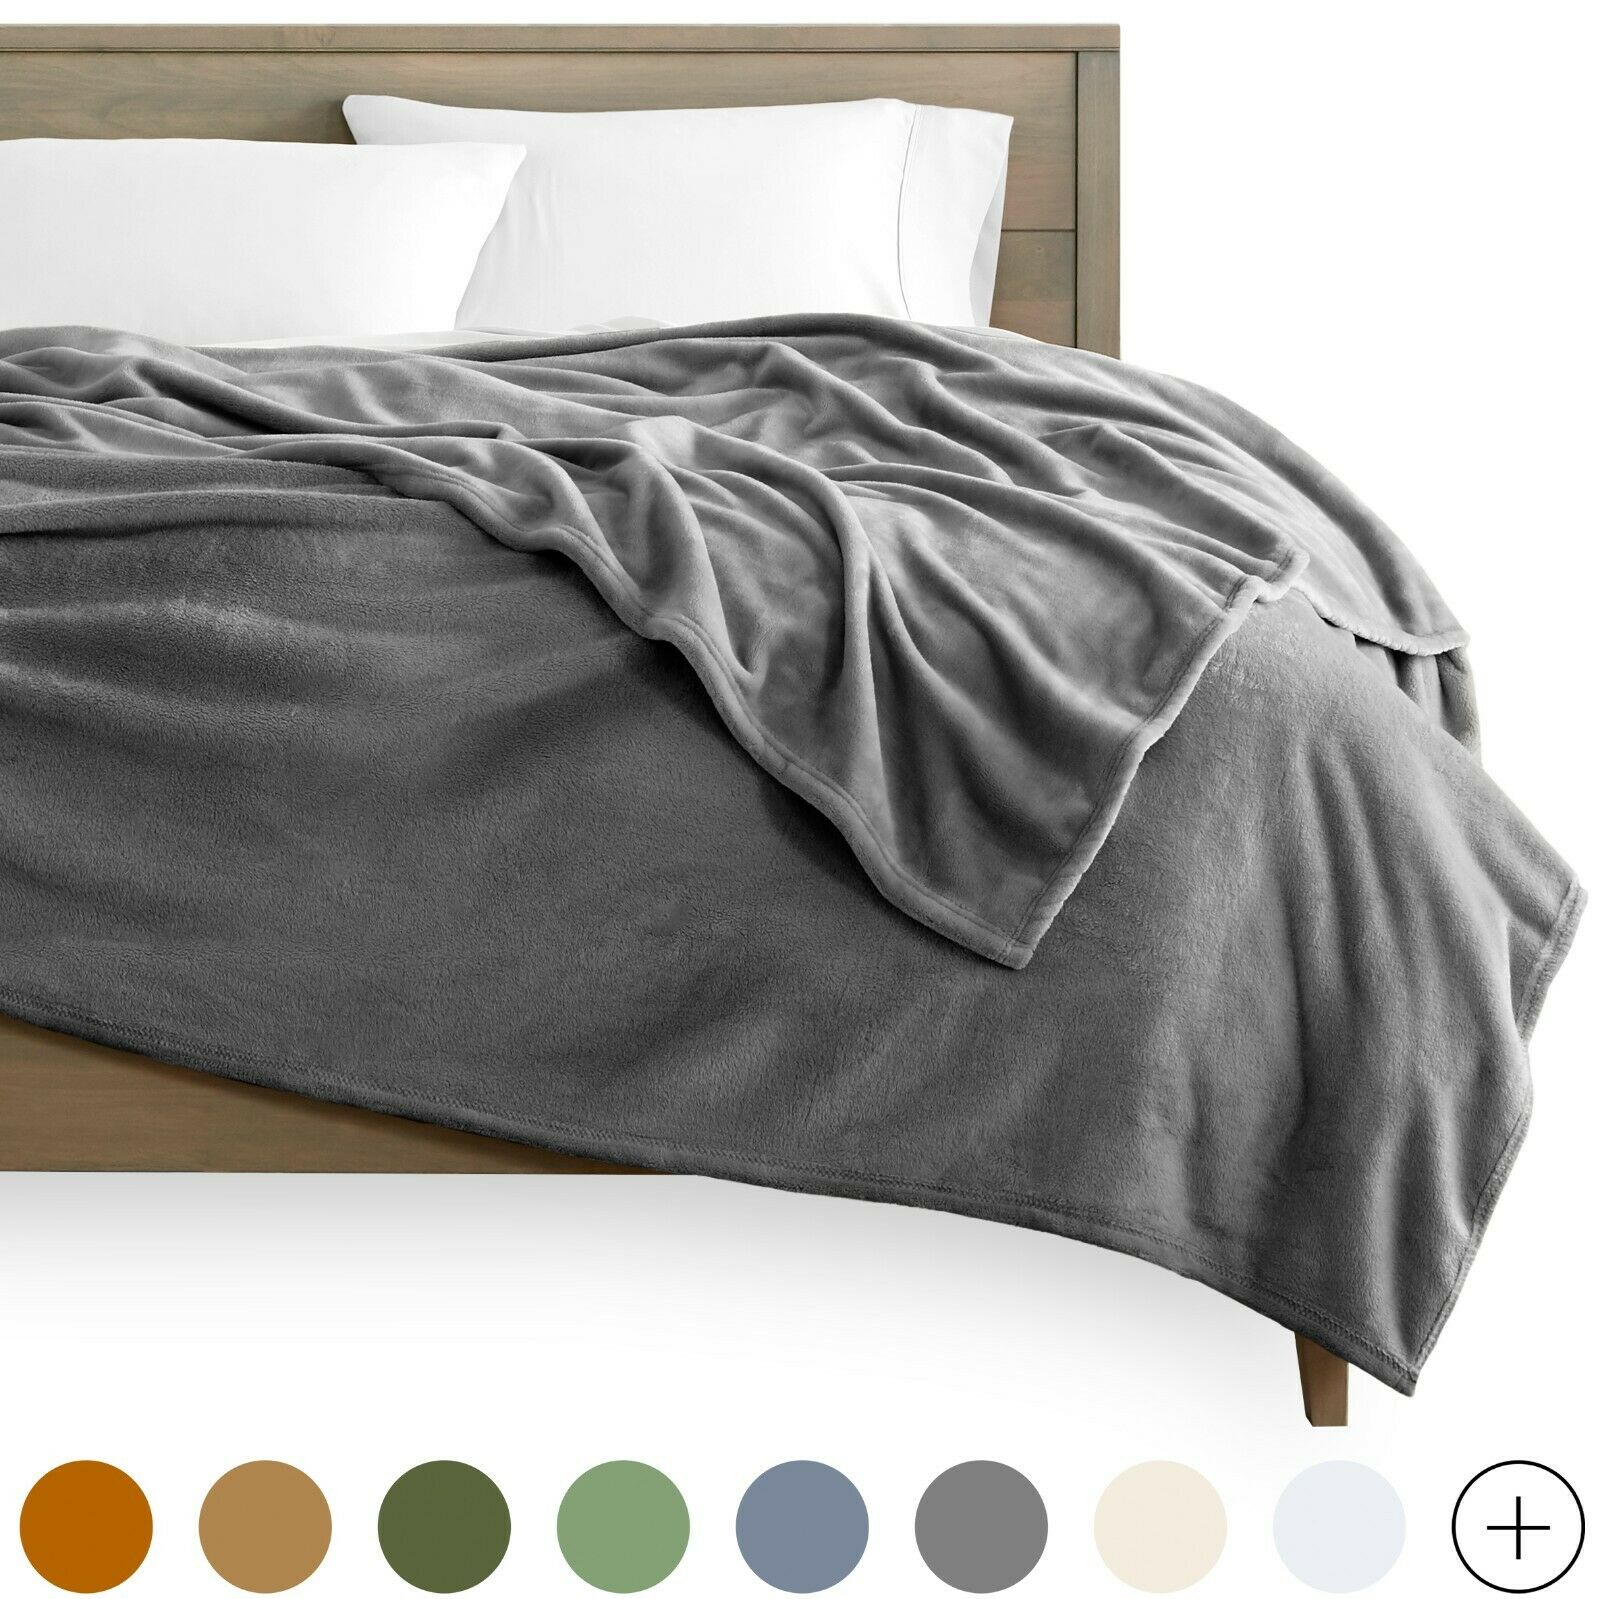 Microplush Velvet Fleece Blanket - Premium Ultra Soft - Easy Care - Warm & Cozy